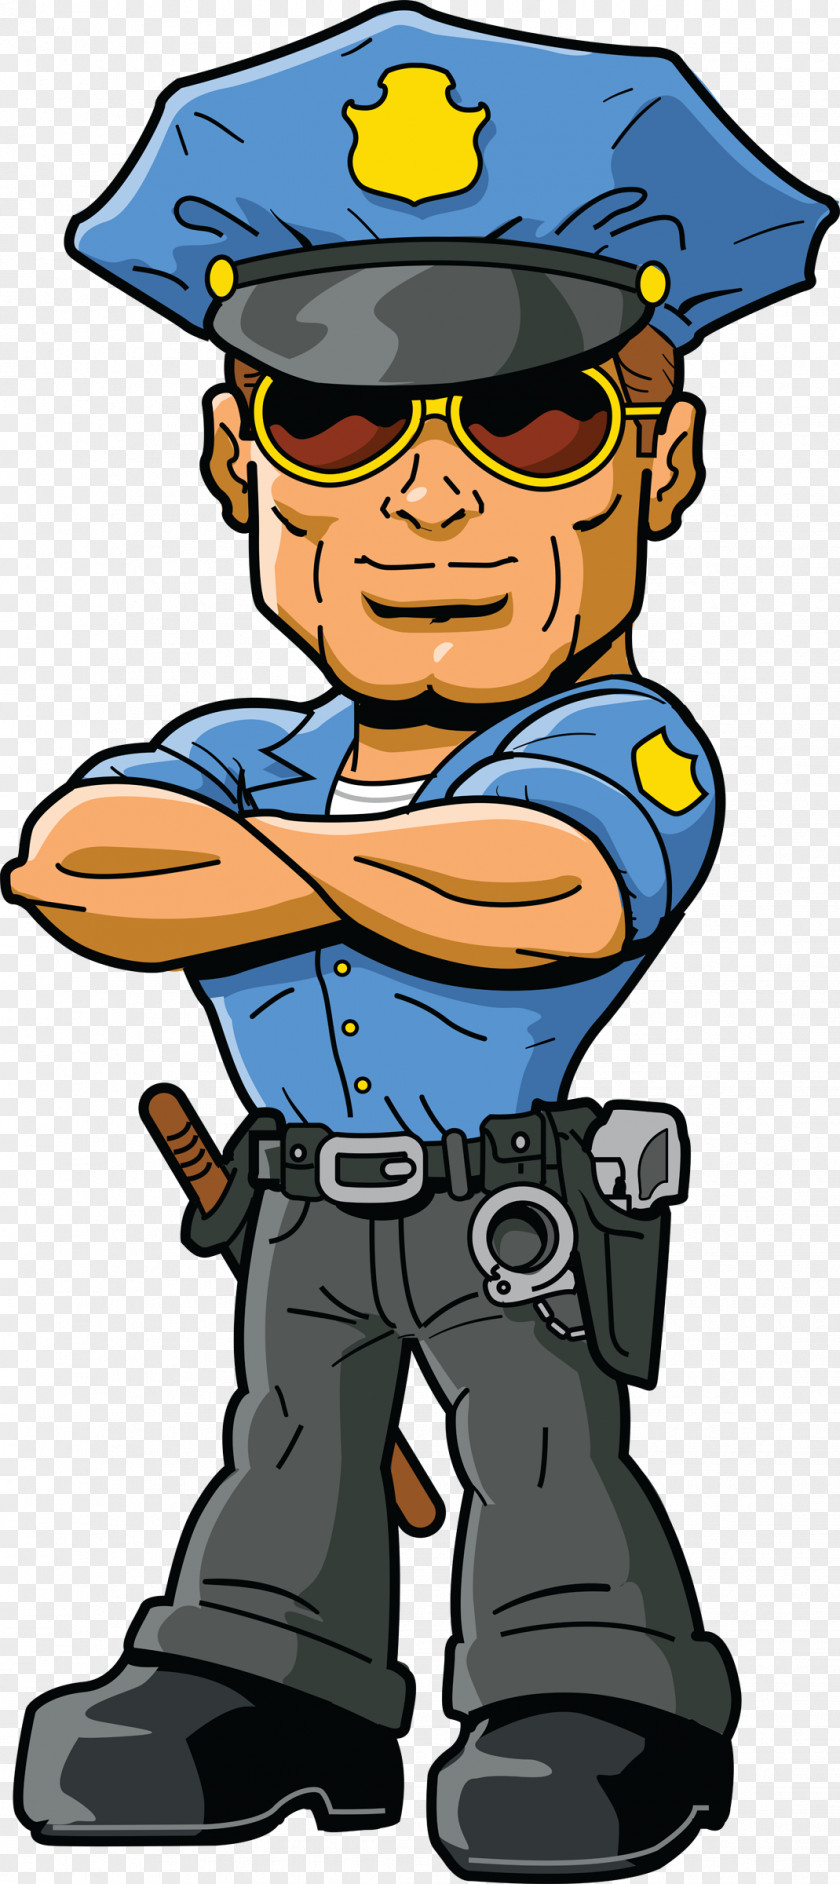 Firefighter Police Officer Cartoon Clip Art PNG